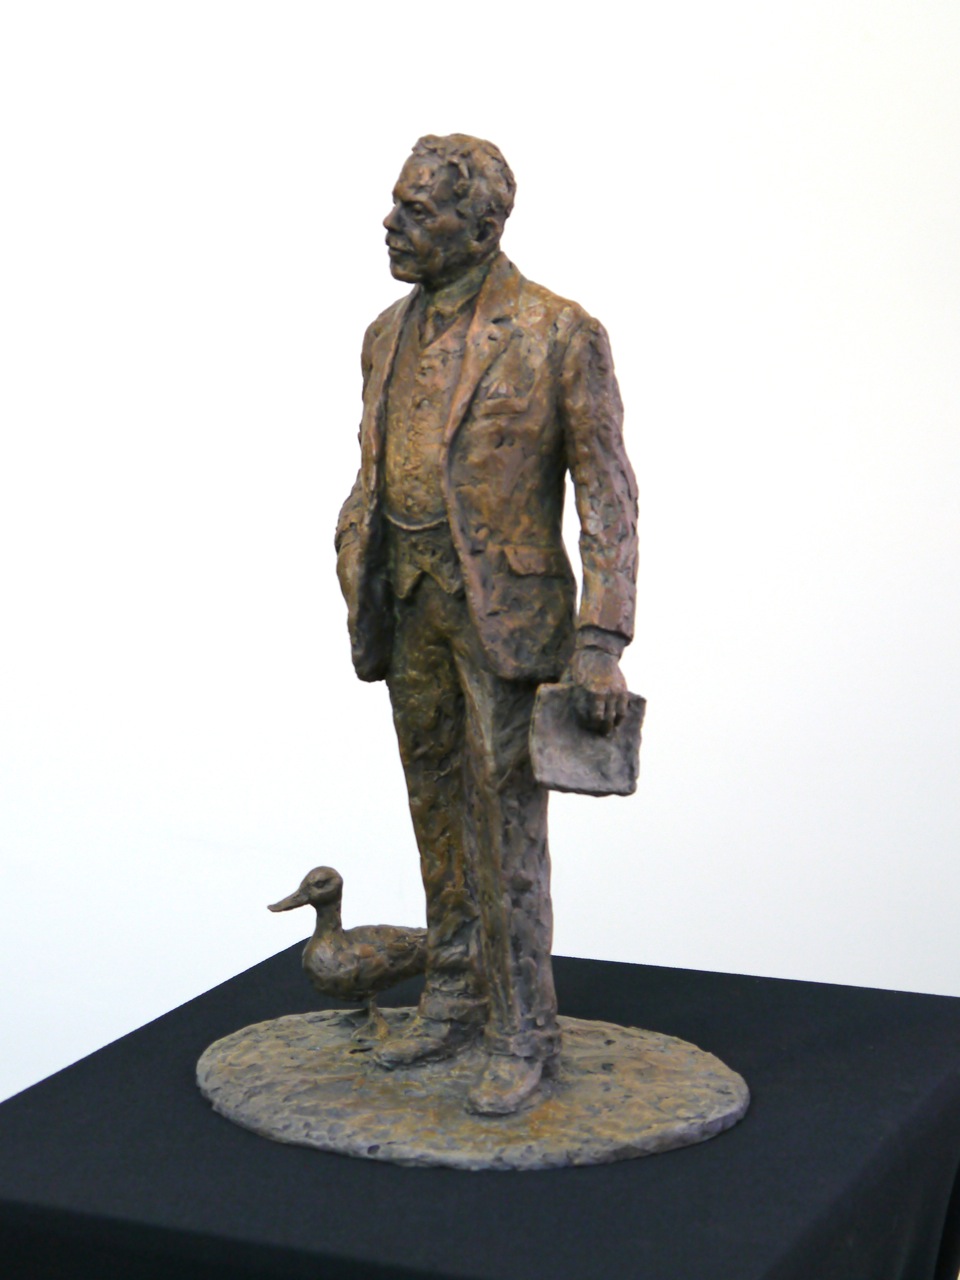 The bronze Sir Nigel Gresley and Mallard maquette